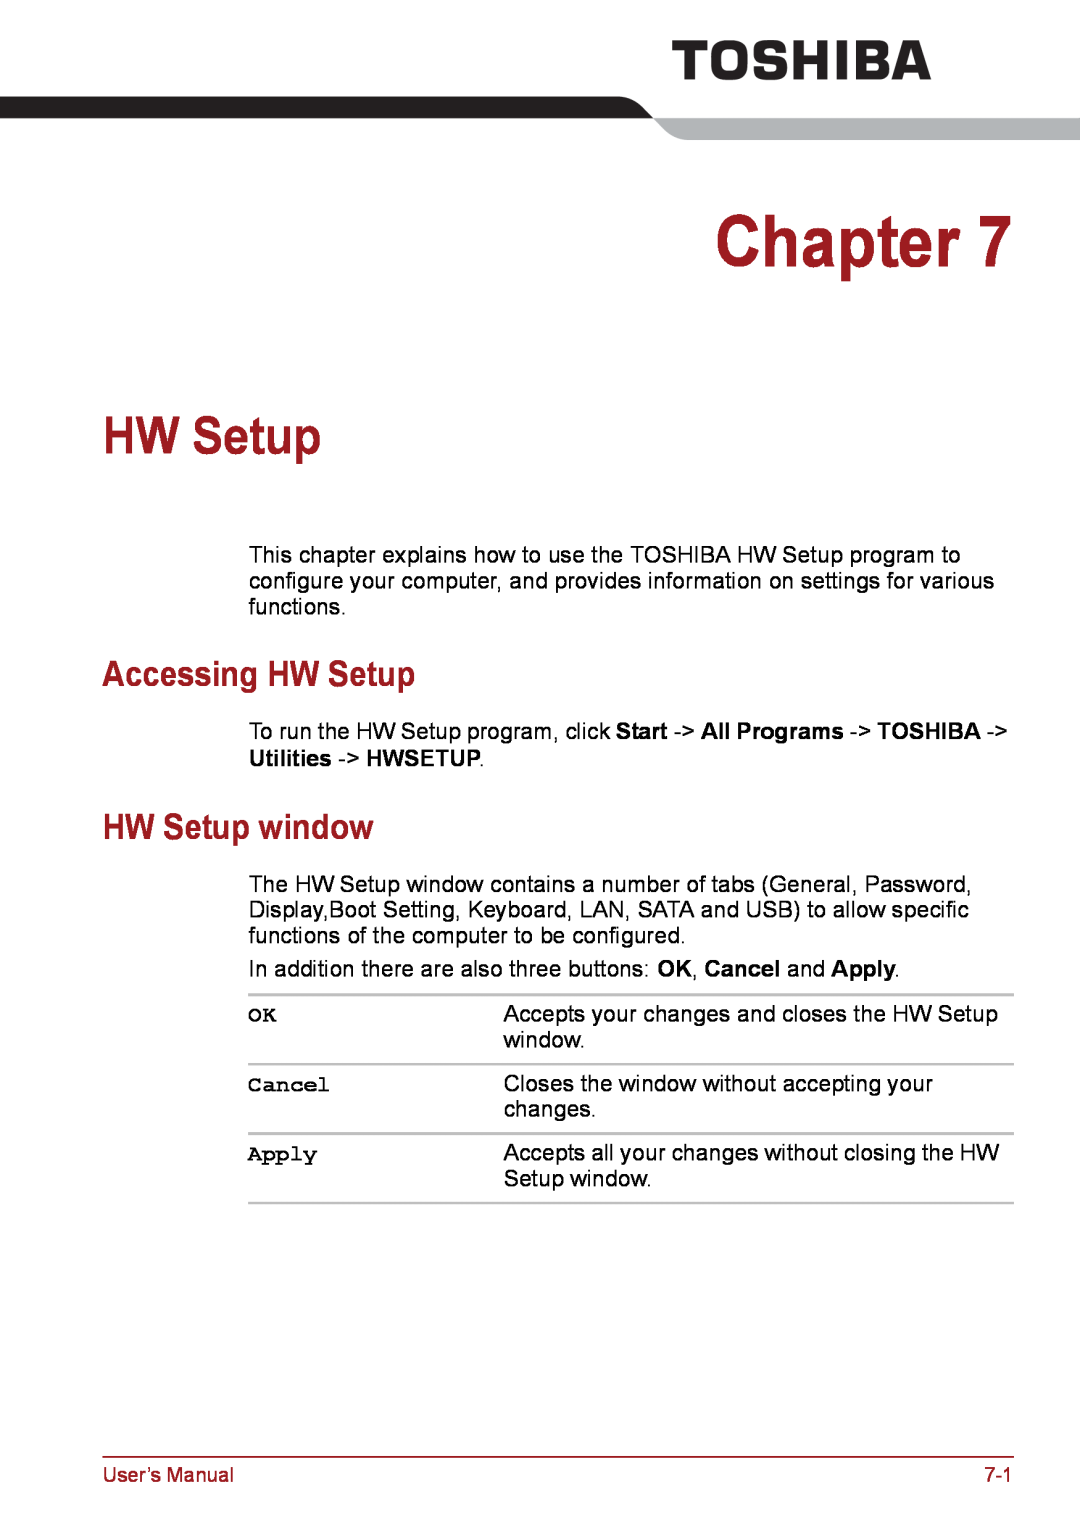 Toshiba PSC08U-02D01D user manual Accessing HW Setup, HW Setup window, Utilities - HWSETUP, Cancel, Apply, Chapter 